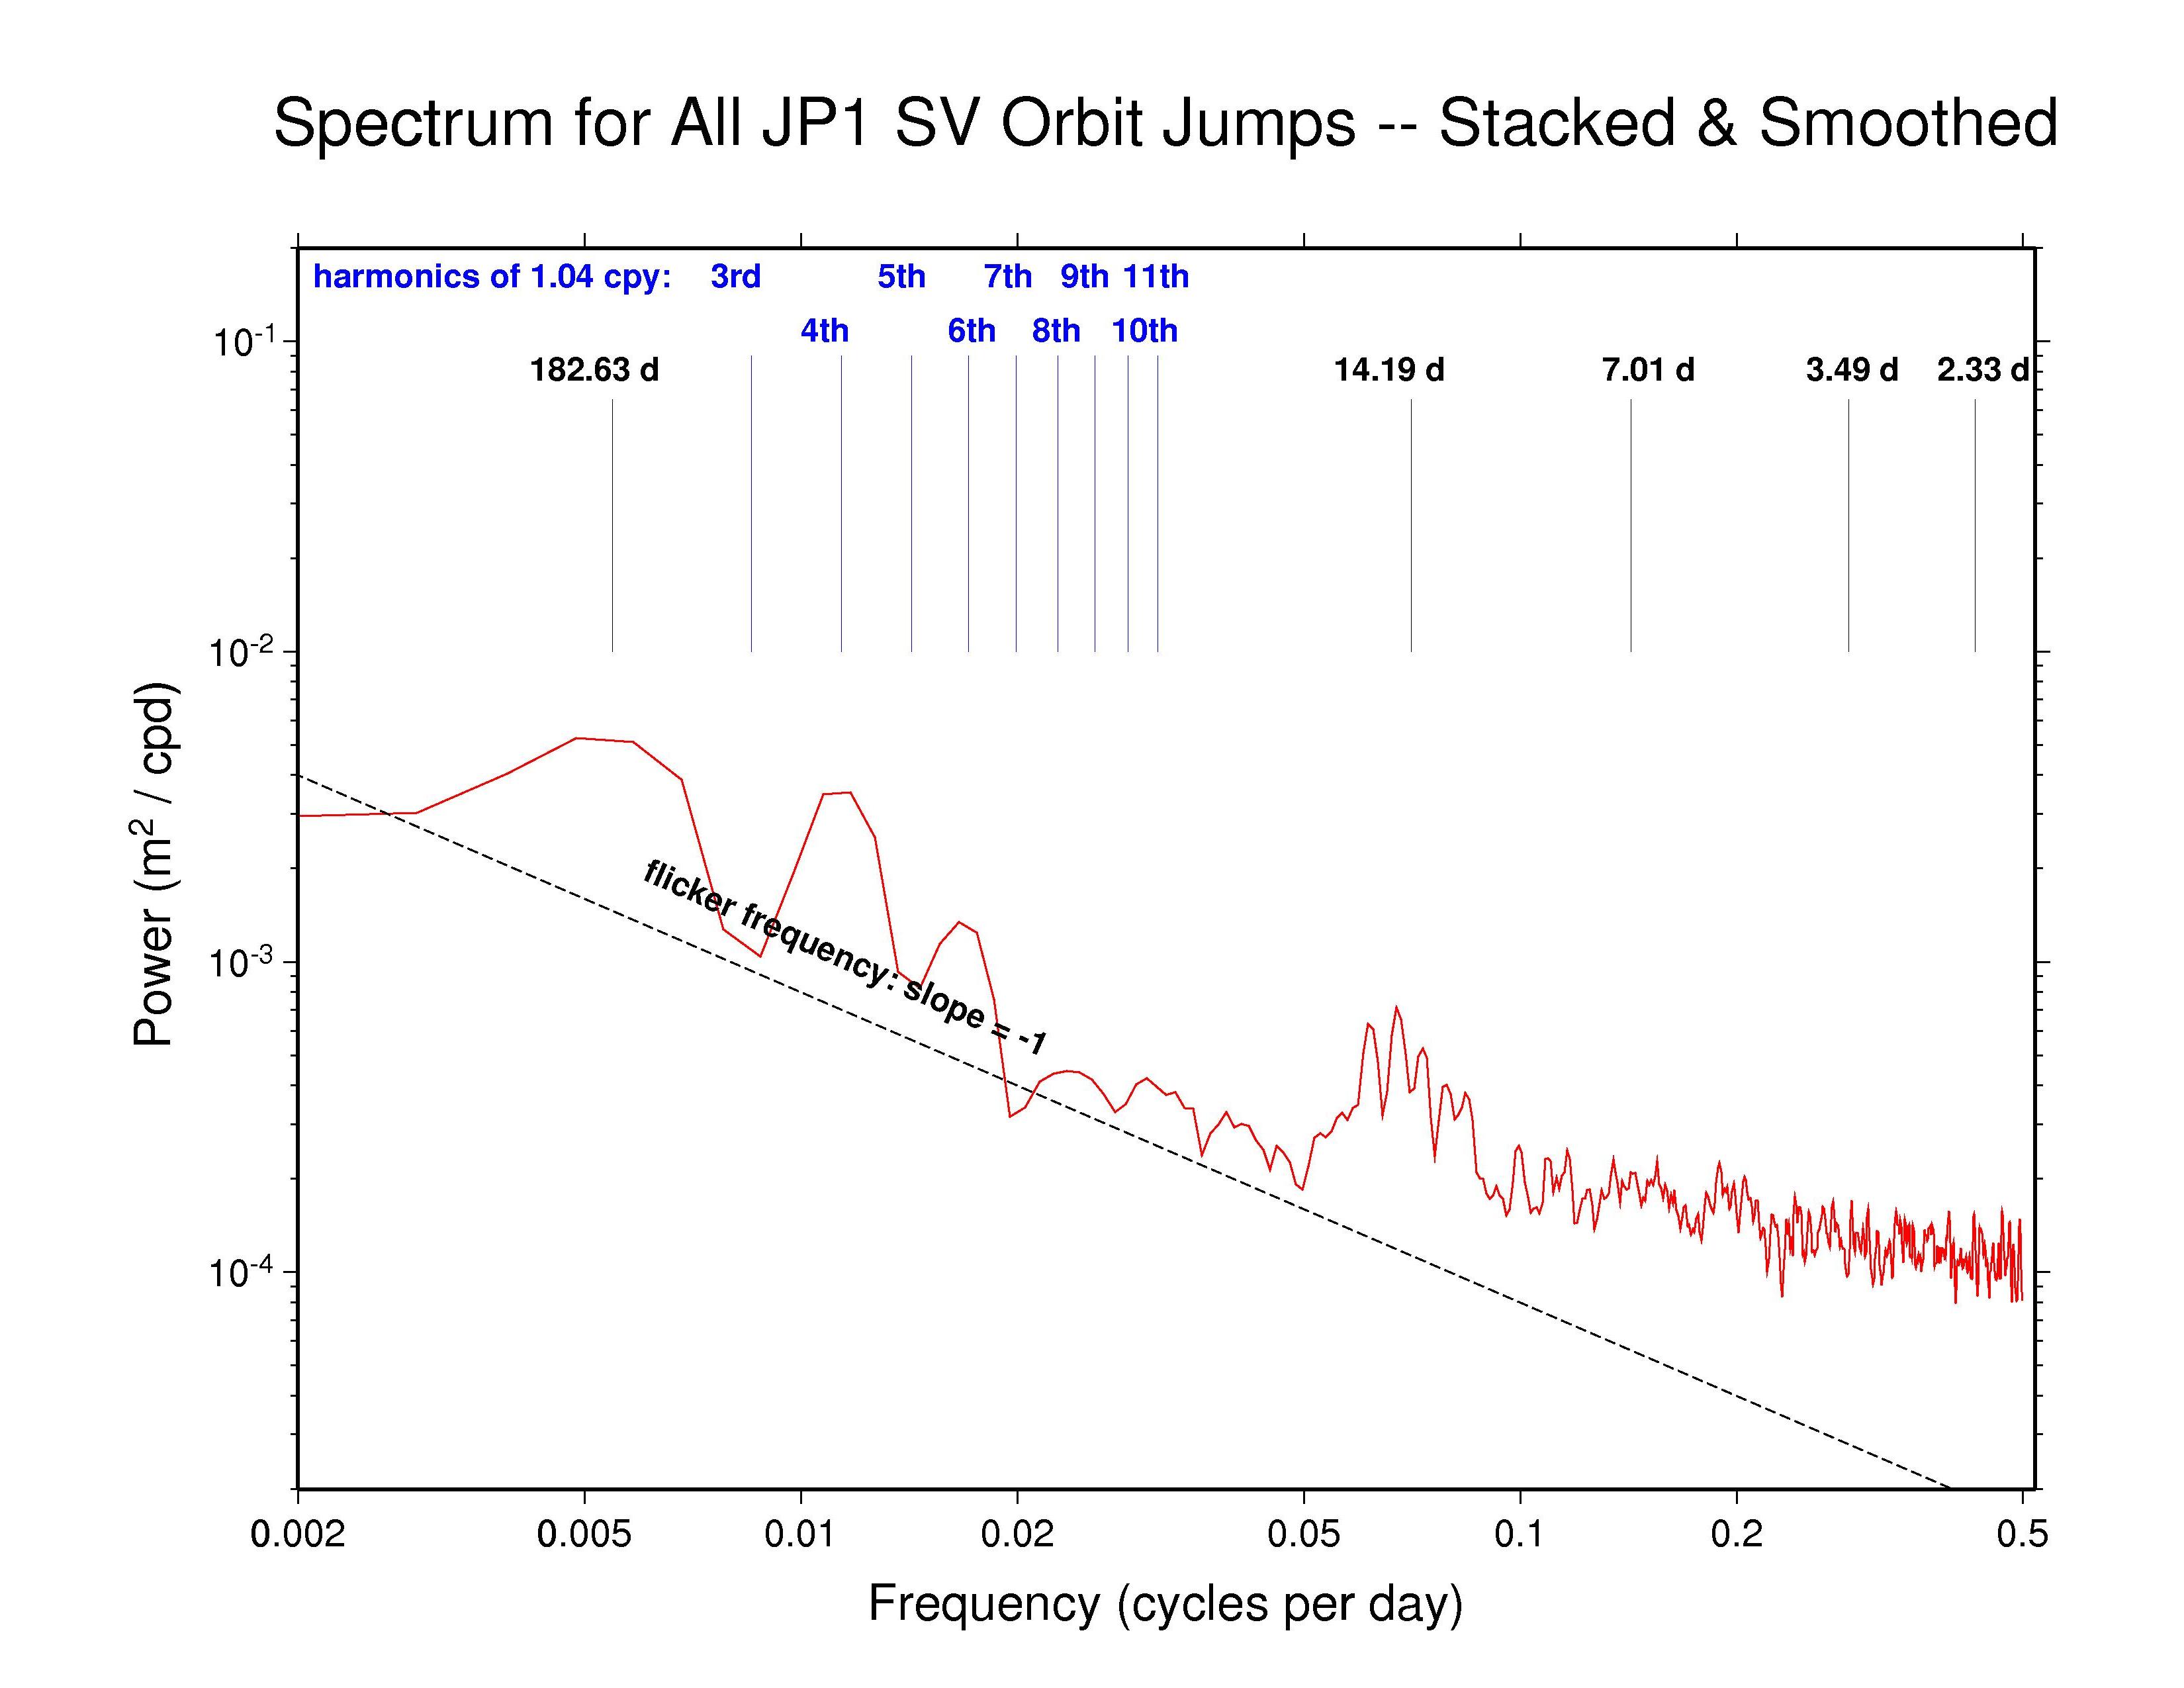 JPL orbit discontinuity spectra